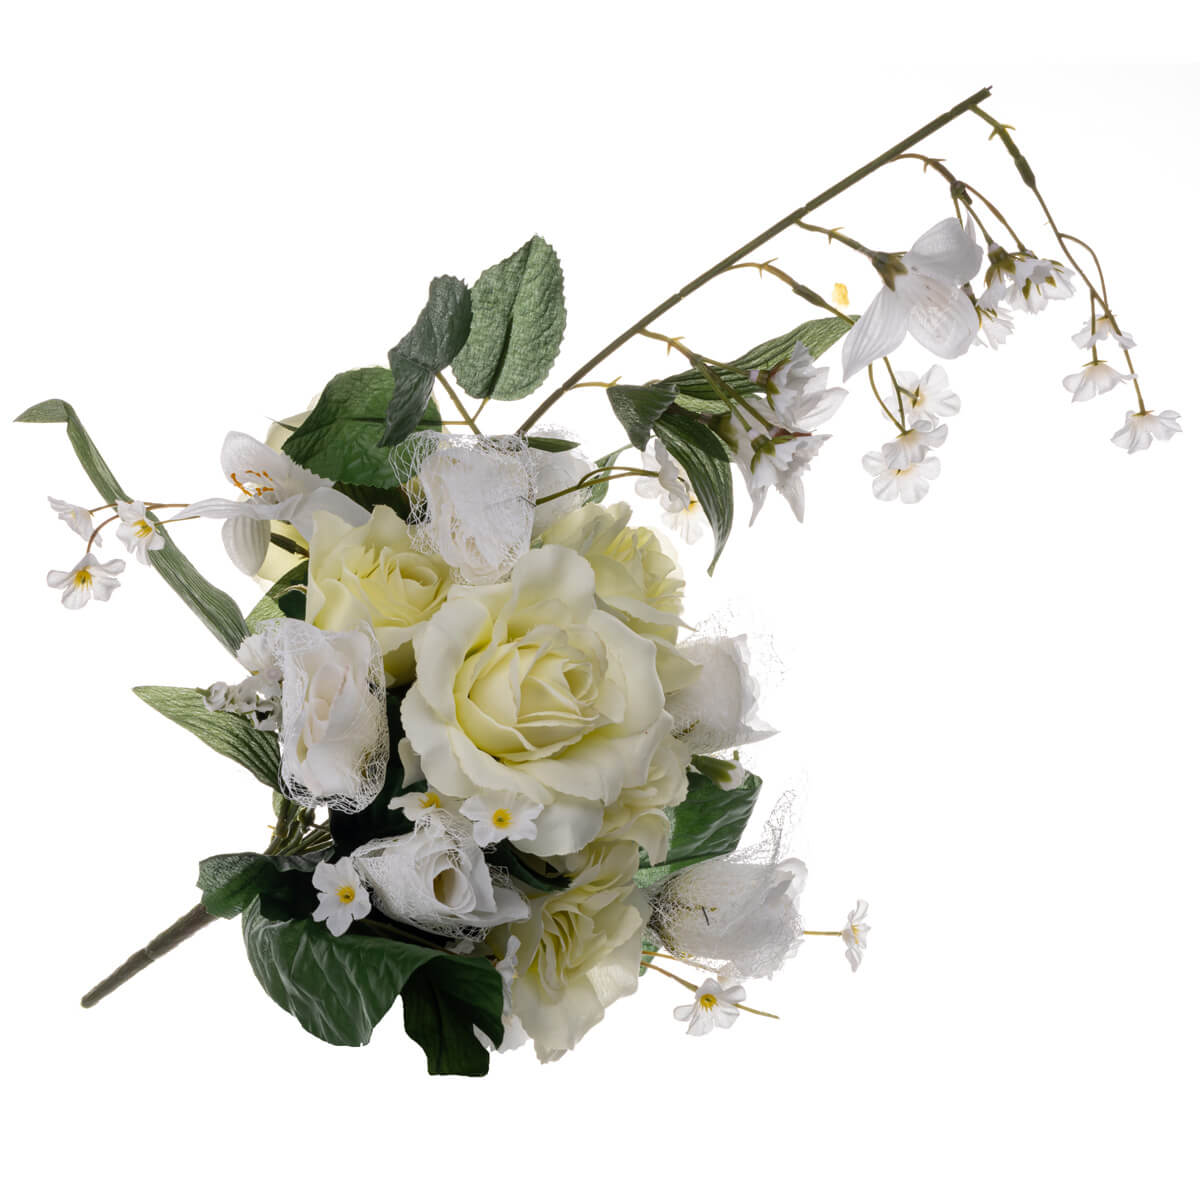 Rich white bouquet